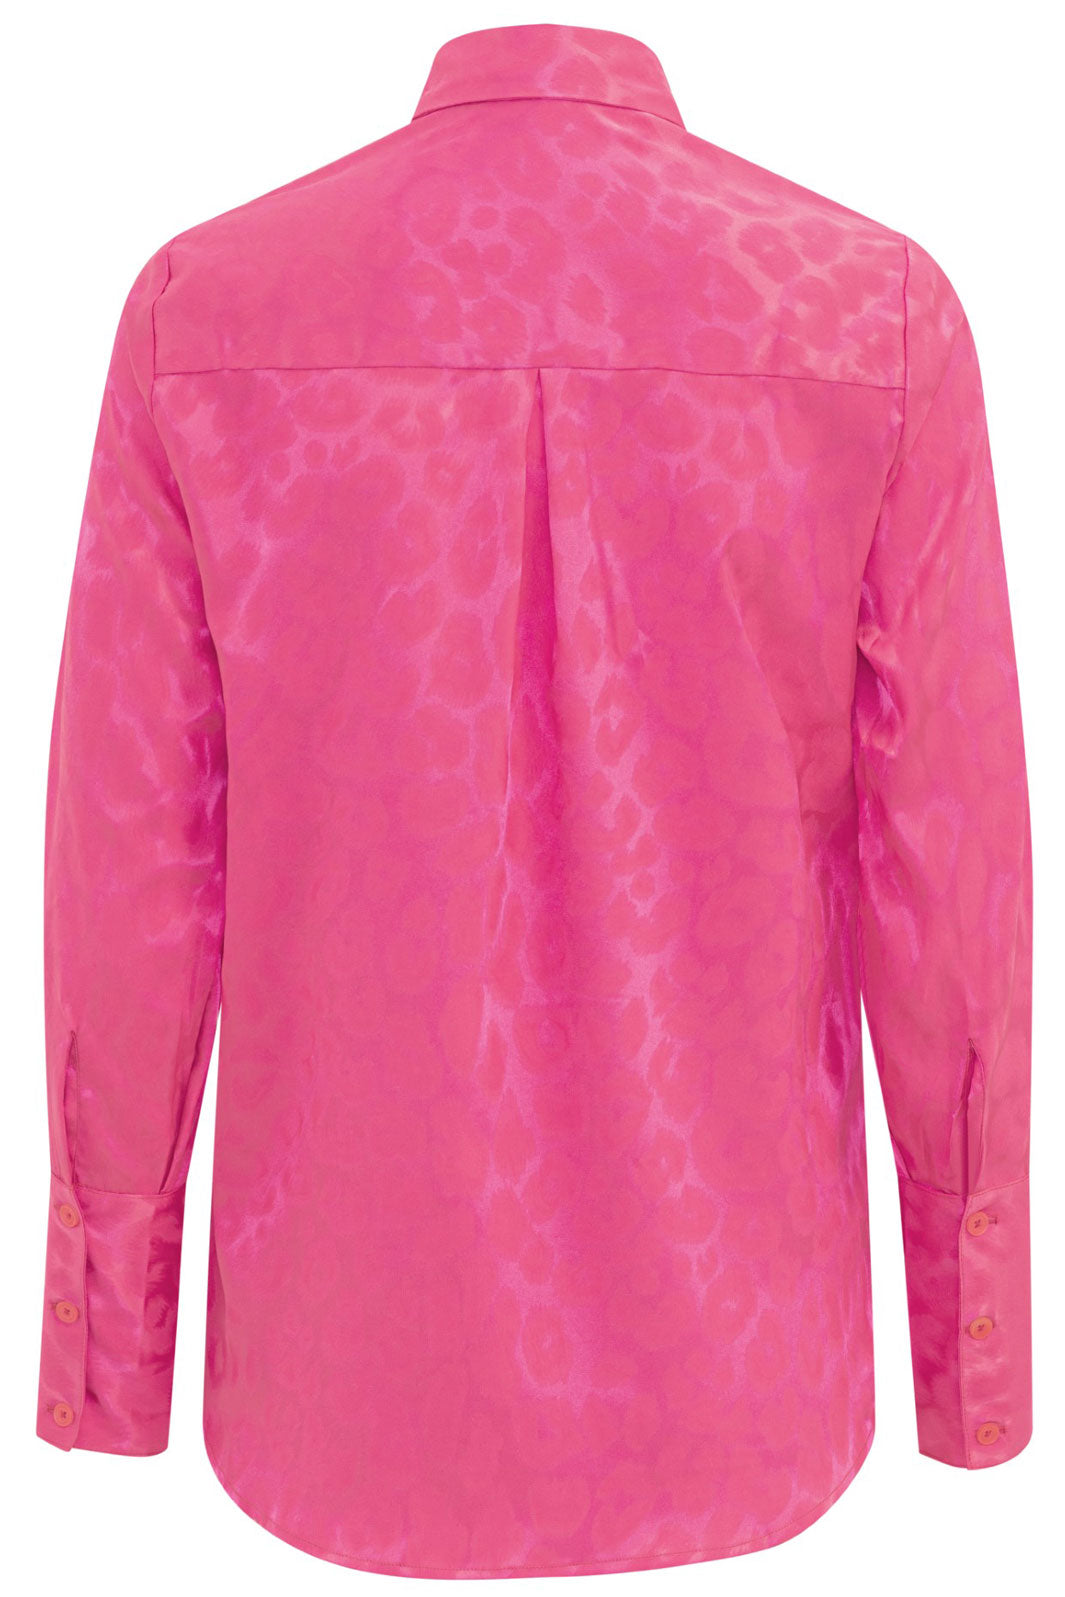 Karmamia - Josephine Shirt - Pink Leo Jacquard Skjorter 